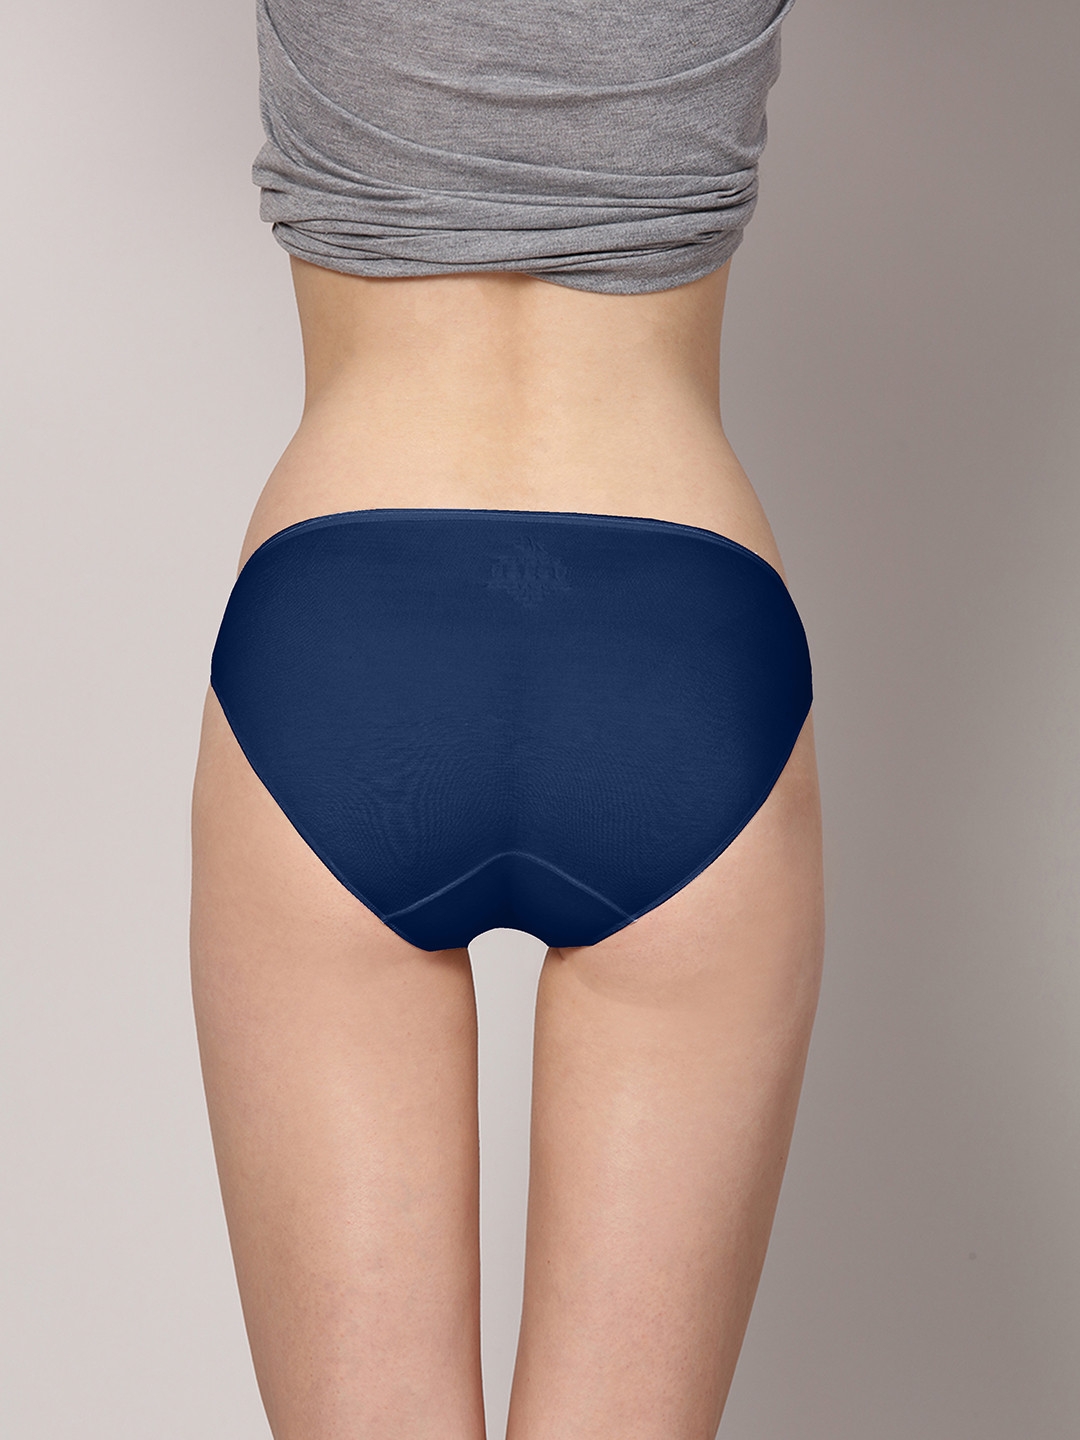 AshleyandAlvis | AshleyandAlvis Women's Panties Micro Modal, Anti Bacterial, Skinny Soft, Premium Bikini-No Itching, Sweat Proof, Double In-seam Gusset 5